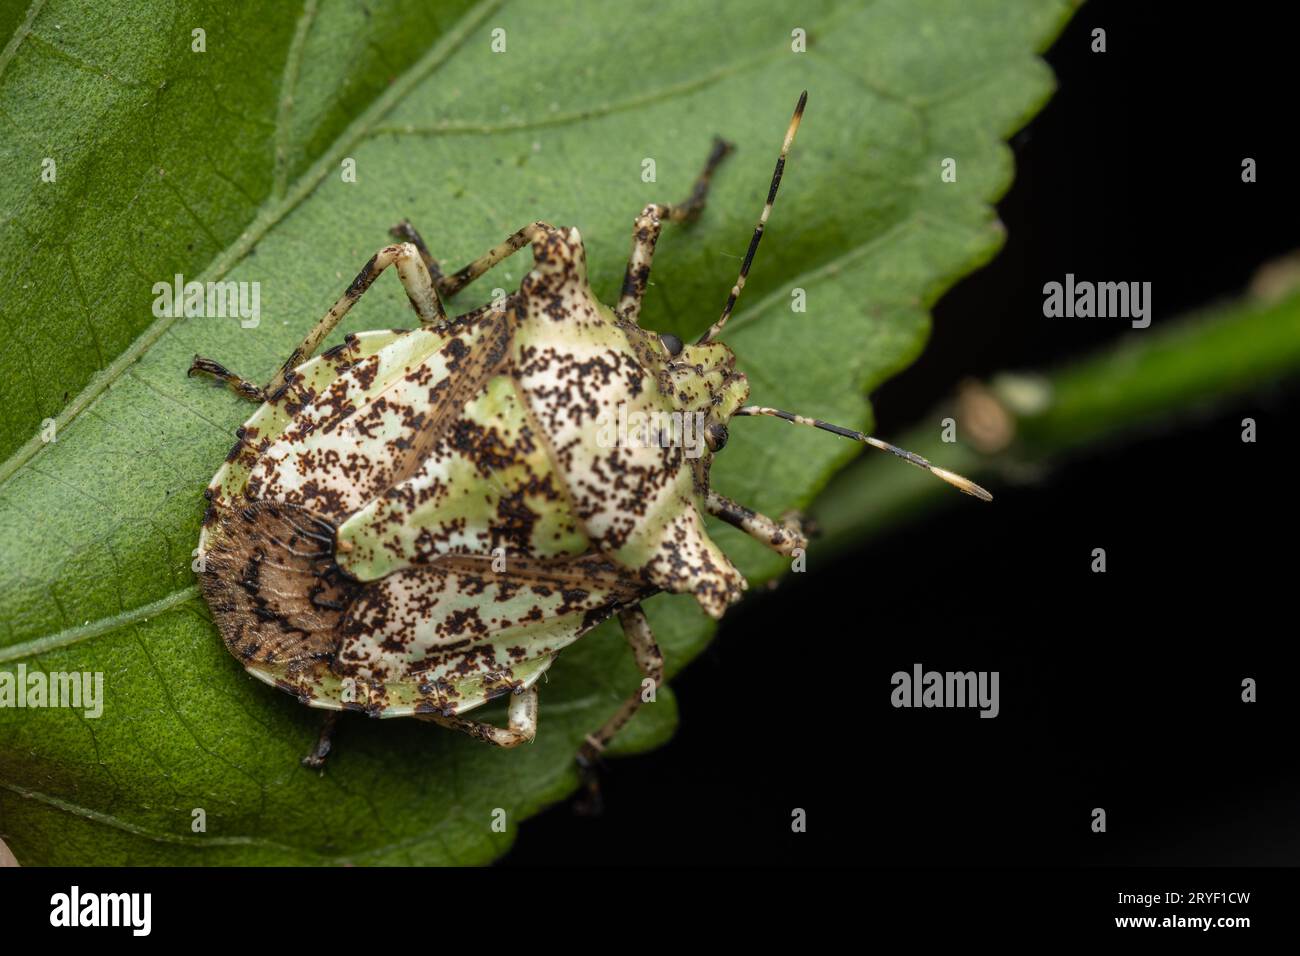 Nature wildlife of beautiful Jewel bug on green leaves Stock Photo